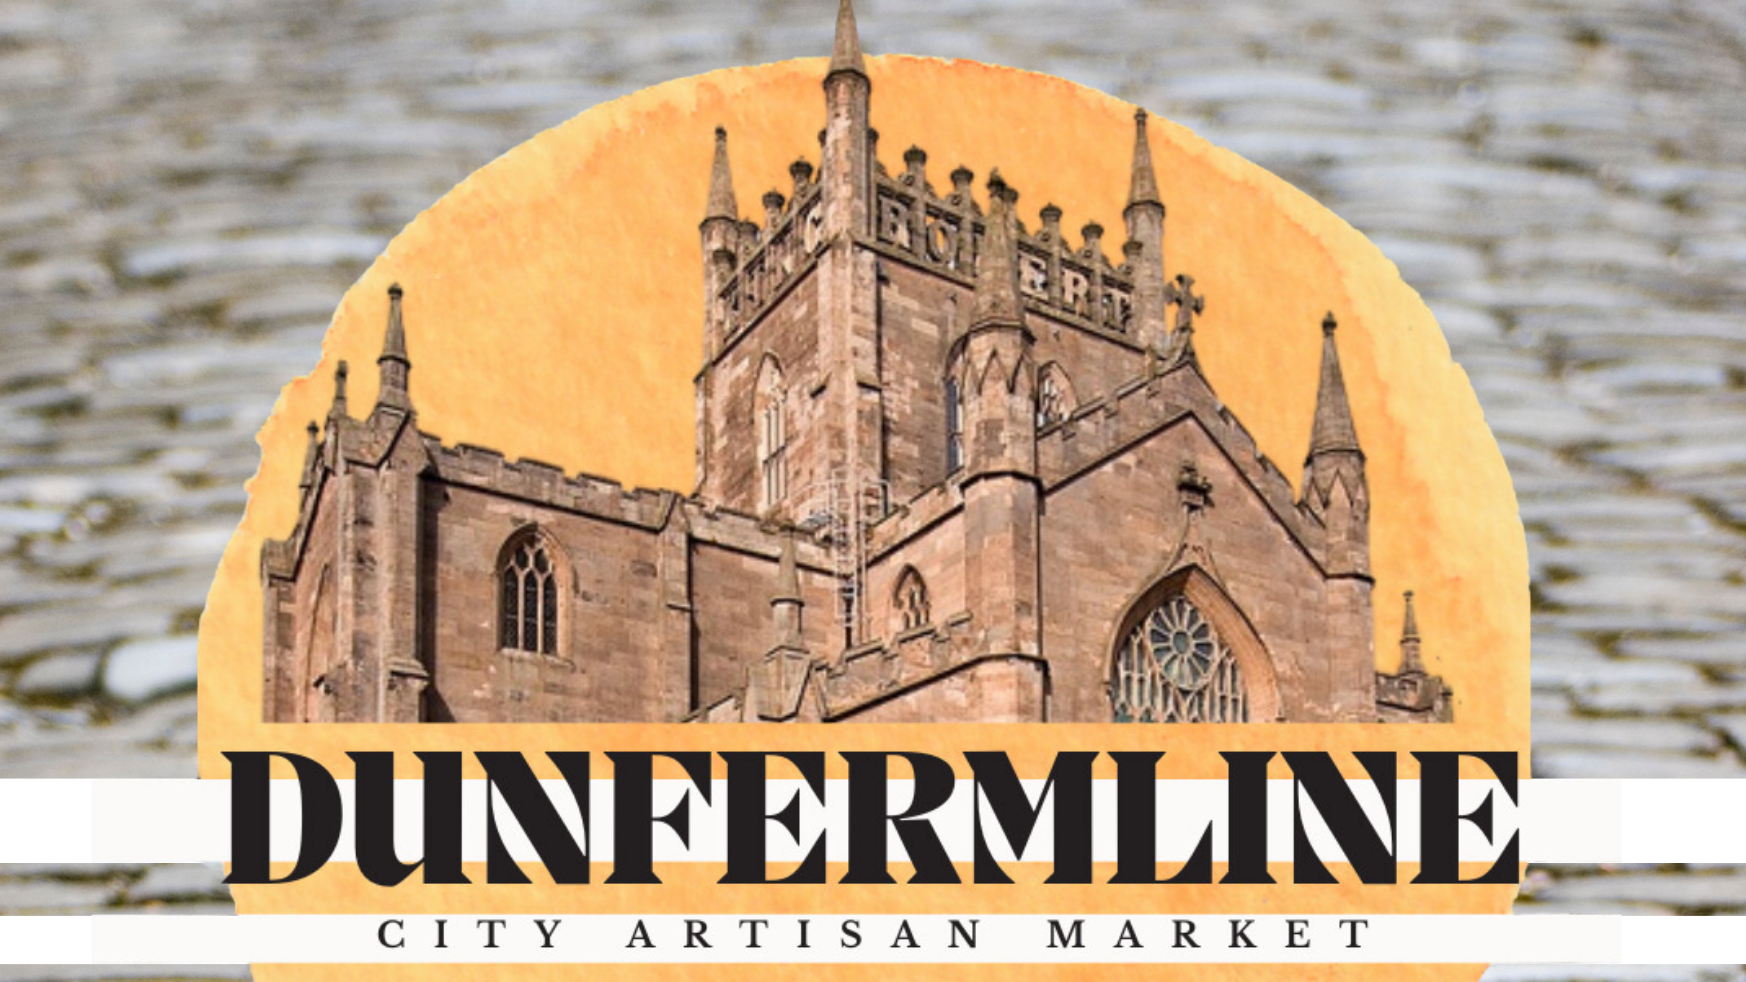 Dunfermline City Artisan Market - May